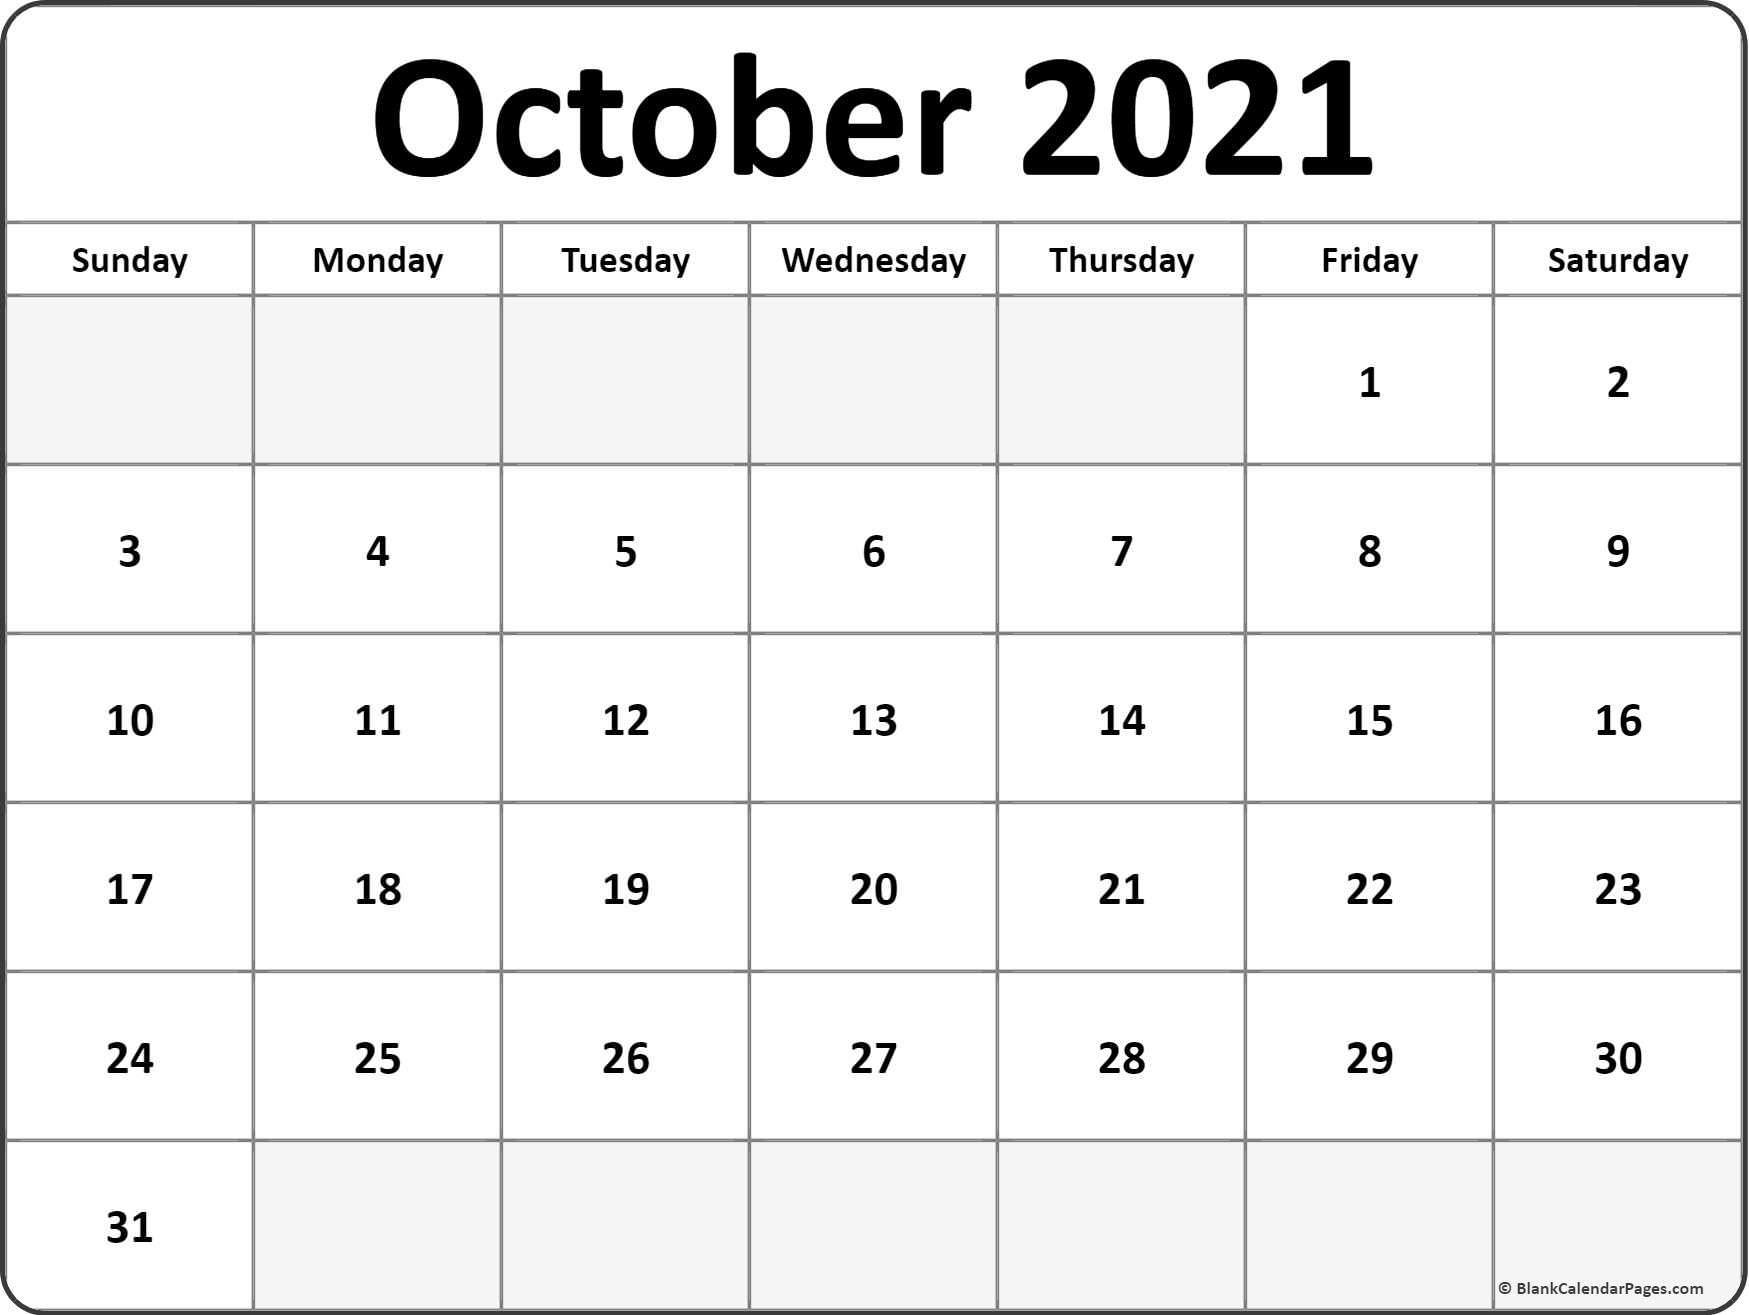 October 2021 Blank Calendar Templates.